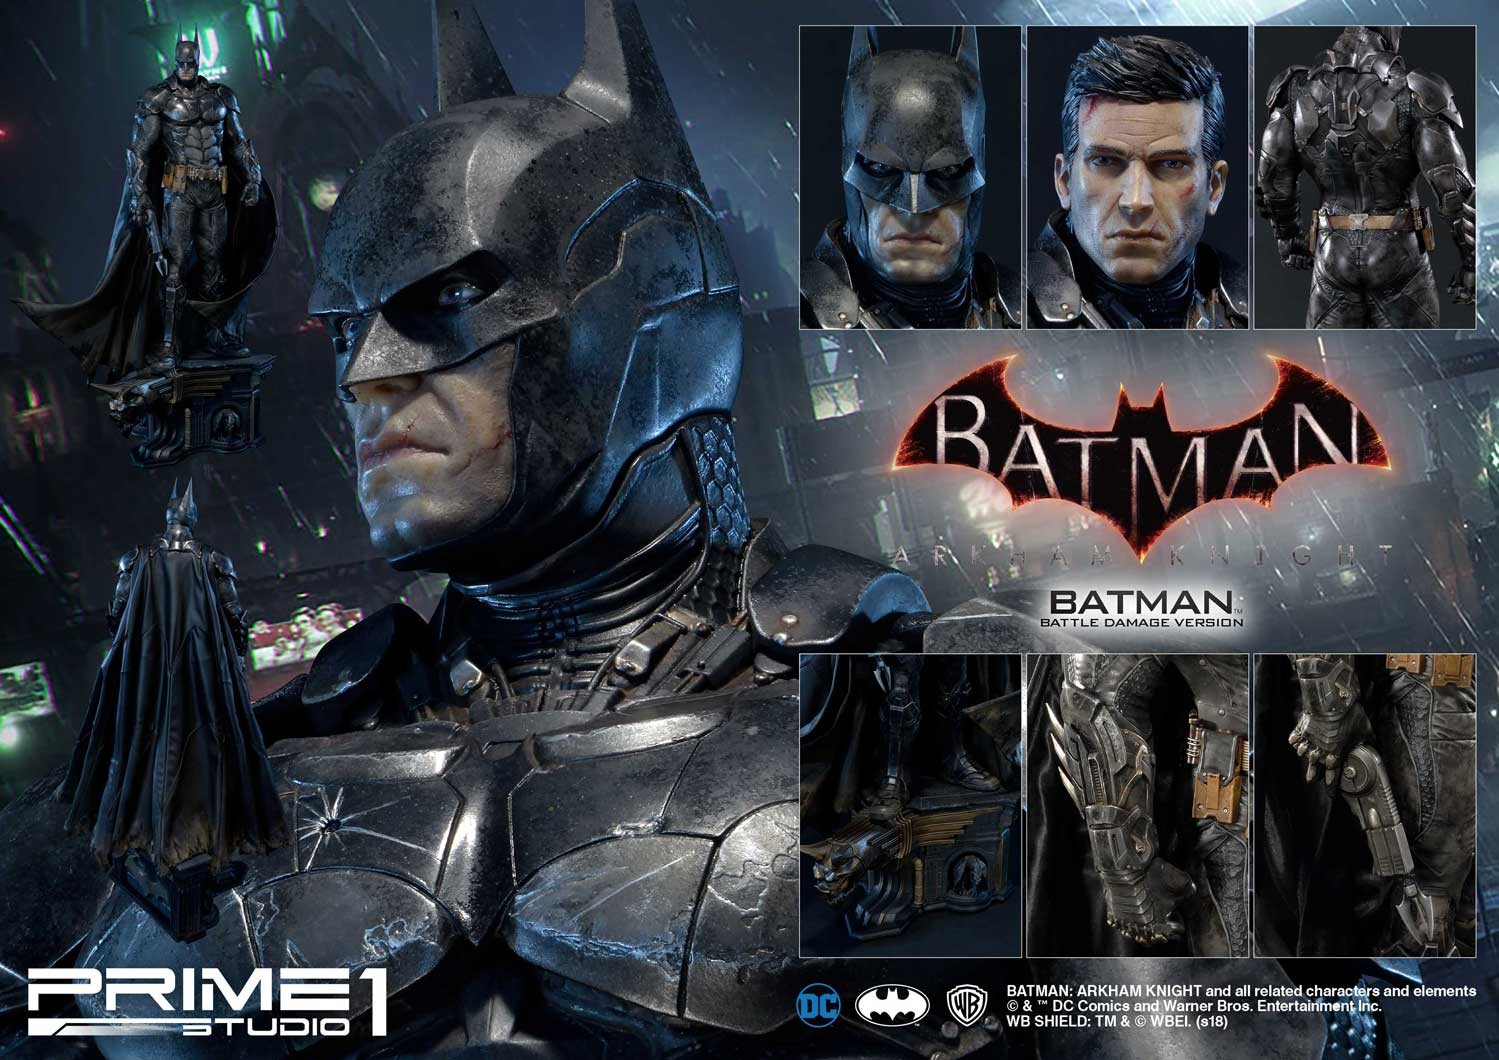 Batman premium edition. Брюс Уэйн Бэтмен Аркхем кнайт. Batman Arkham Knight 3. Batman Arkham Knight Batman Prime 1 Studio. Бэтмен Аркхем Сити.